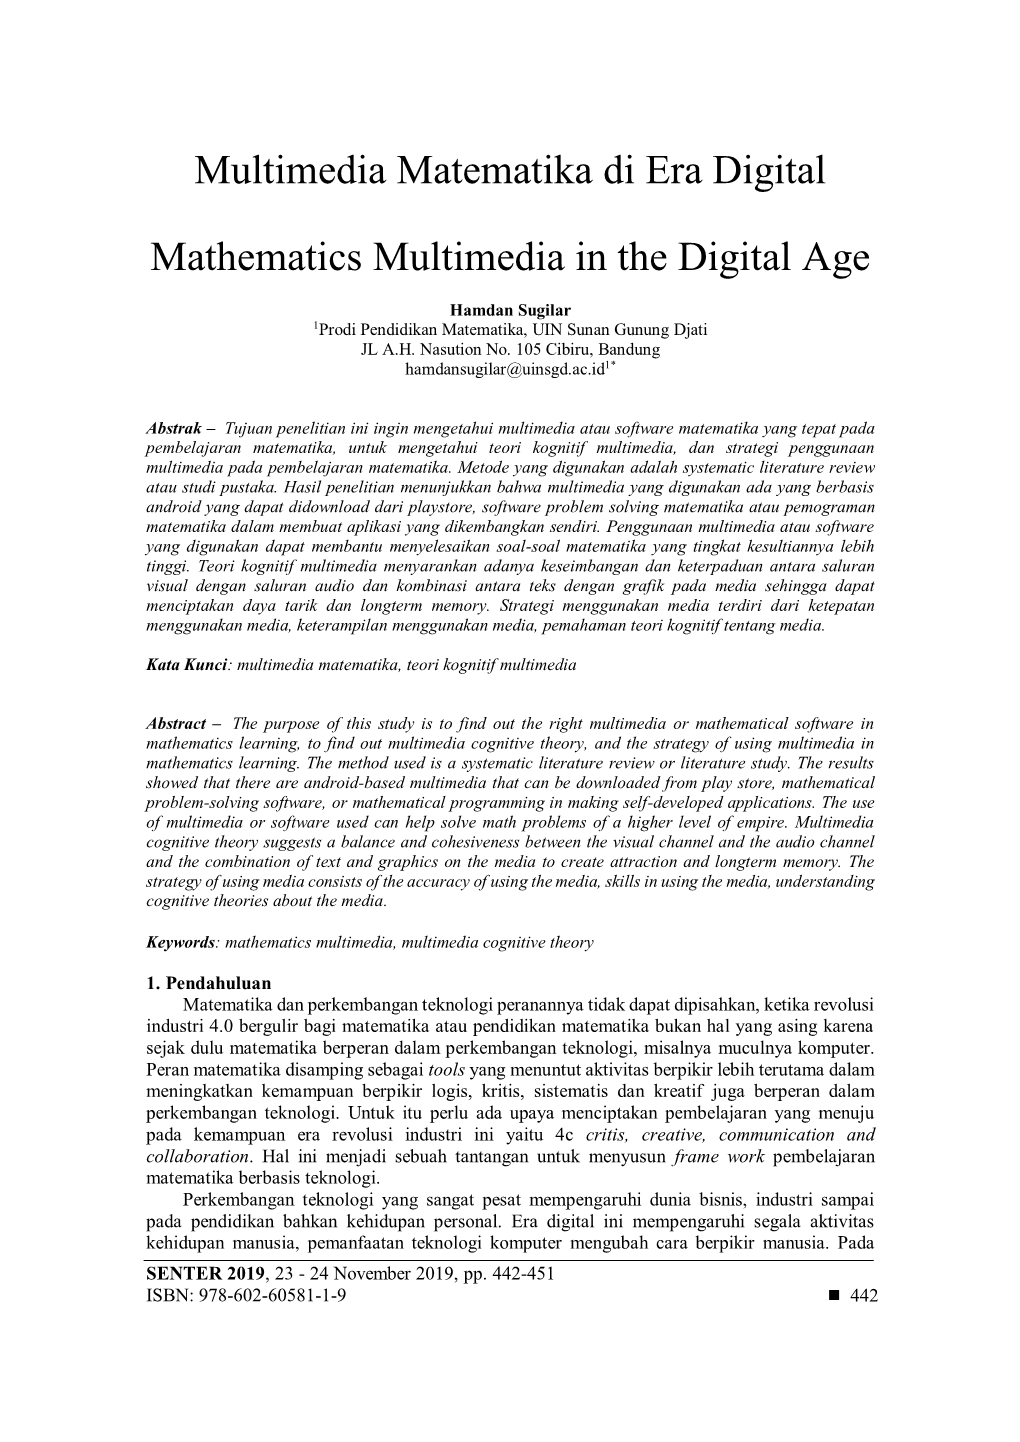 Multimedia Matematika Di Era Digital Mathematics Multimedia in The